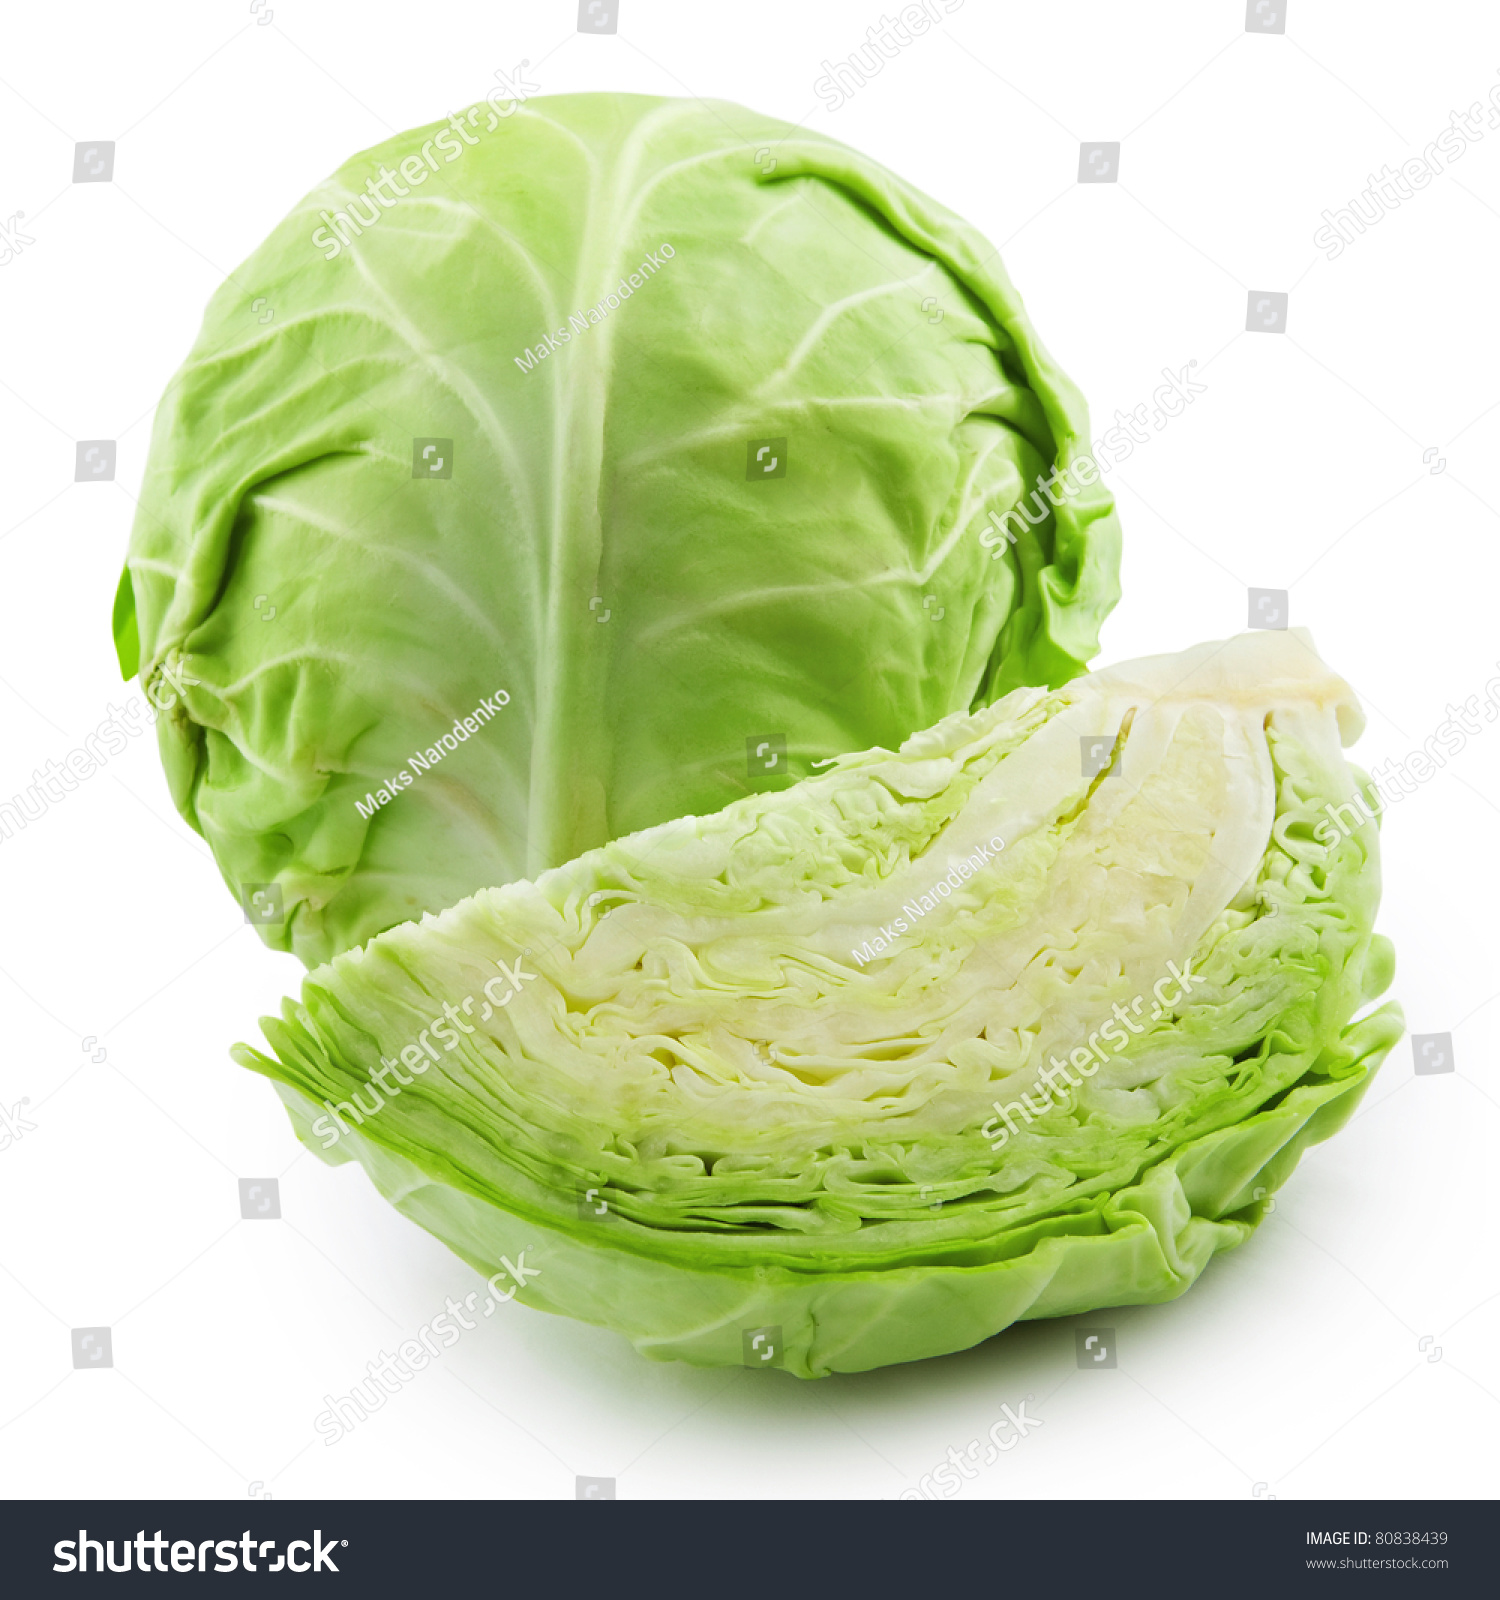 cabbage isolated on white background #80838439